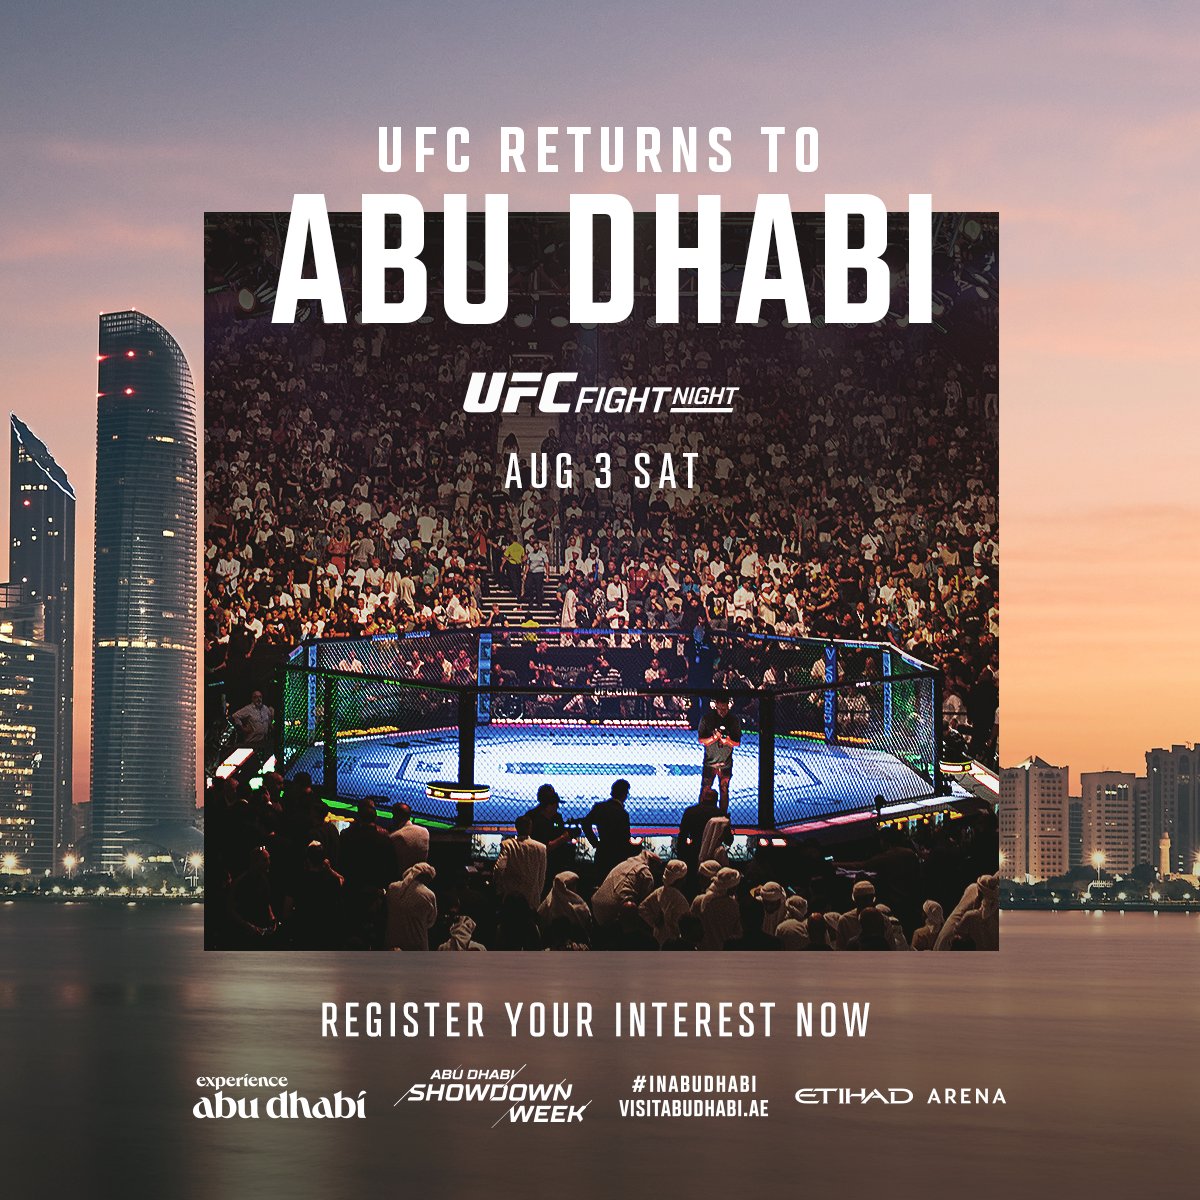 Abu Dhabi, we'll see you soon! 👀

🗓️: AUG 3 SAT

#UFCAbuDhabi | @VisitAbuDhabi | @InAbuDhabi | #InAbuDhabi